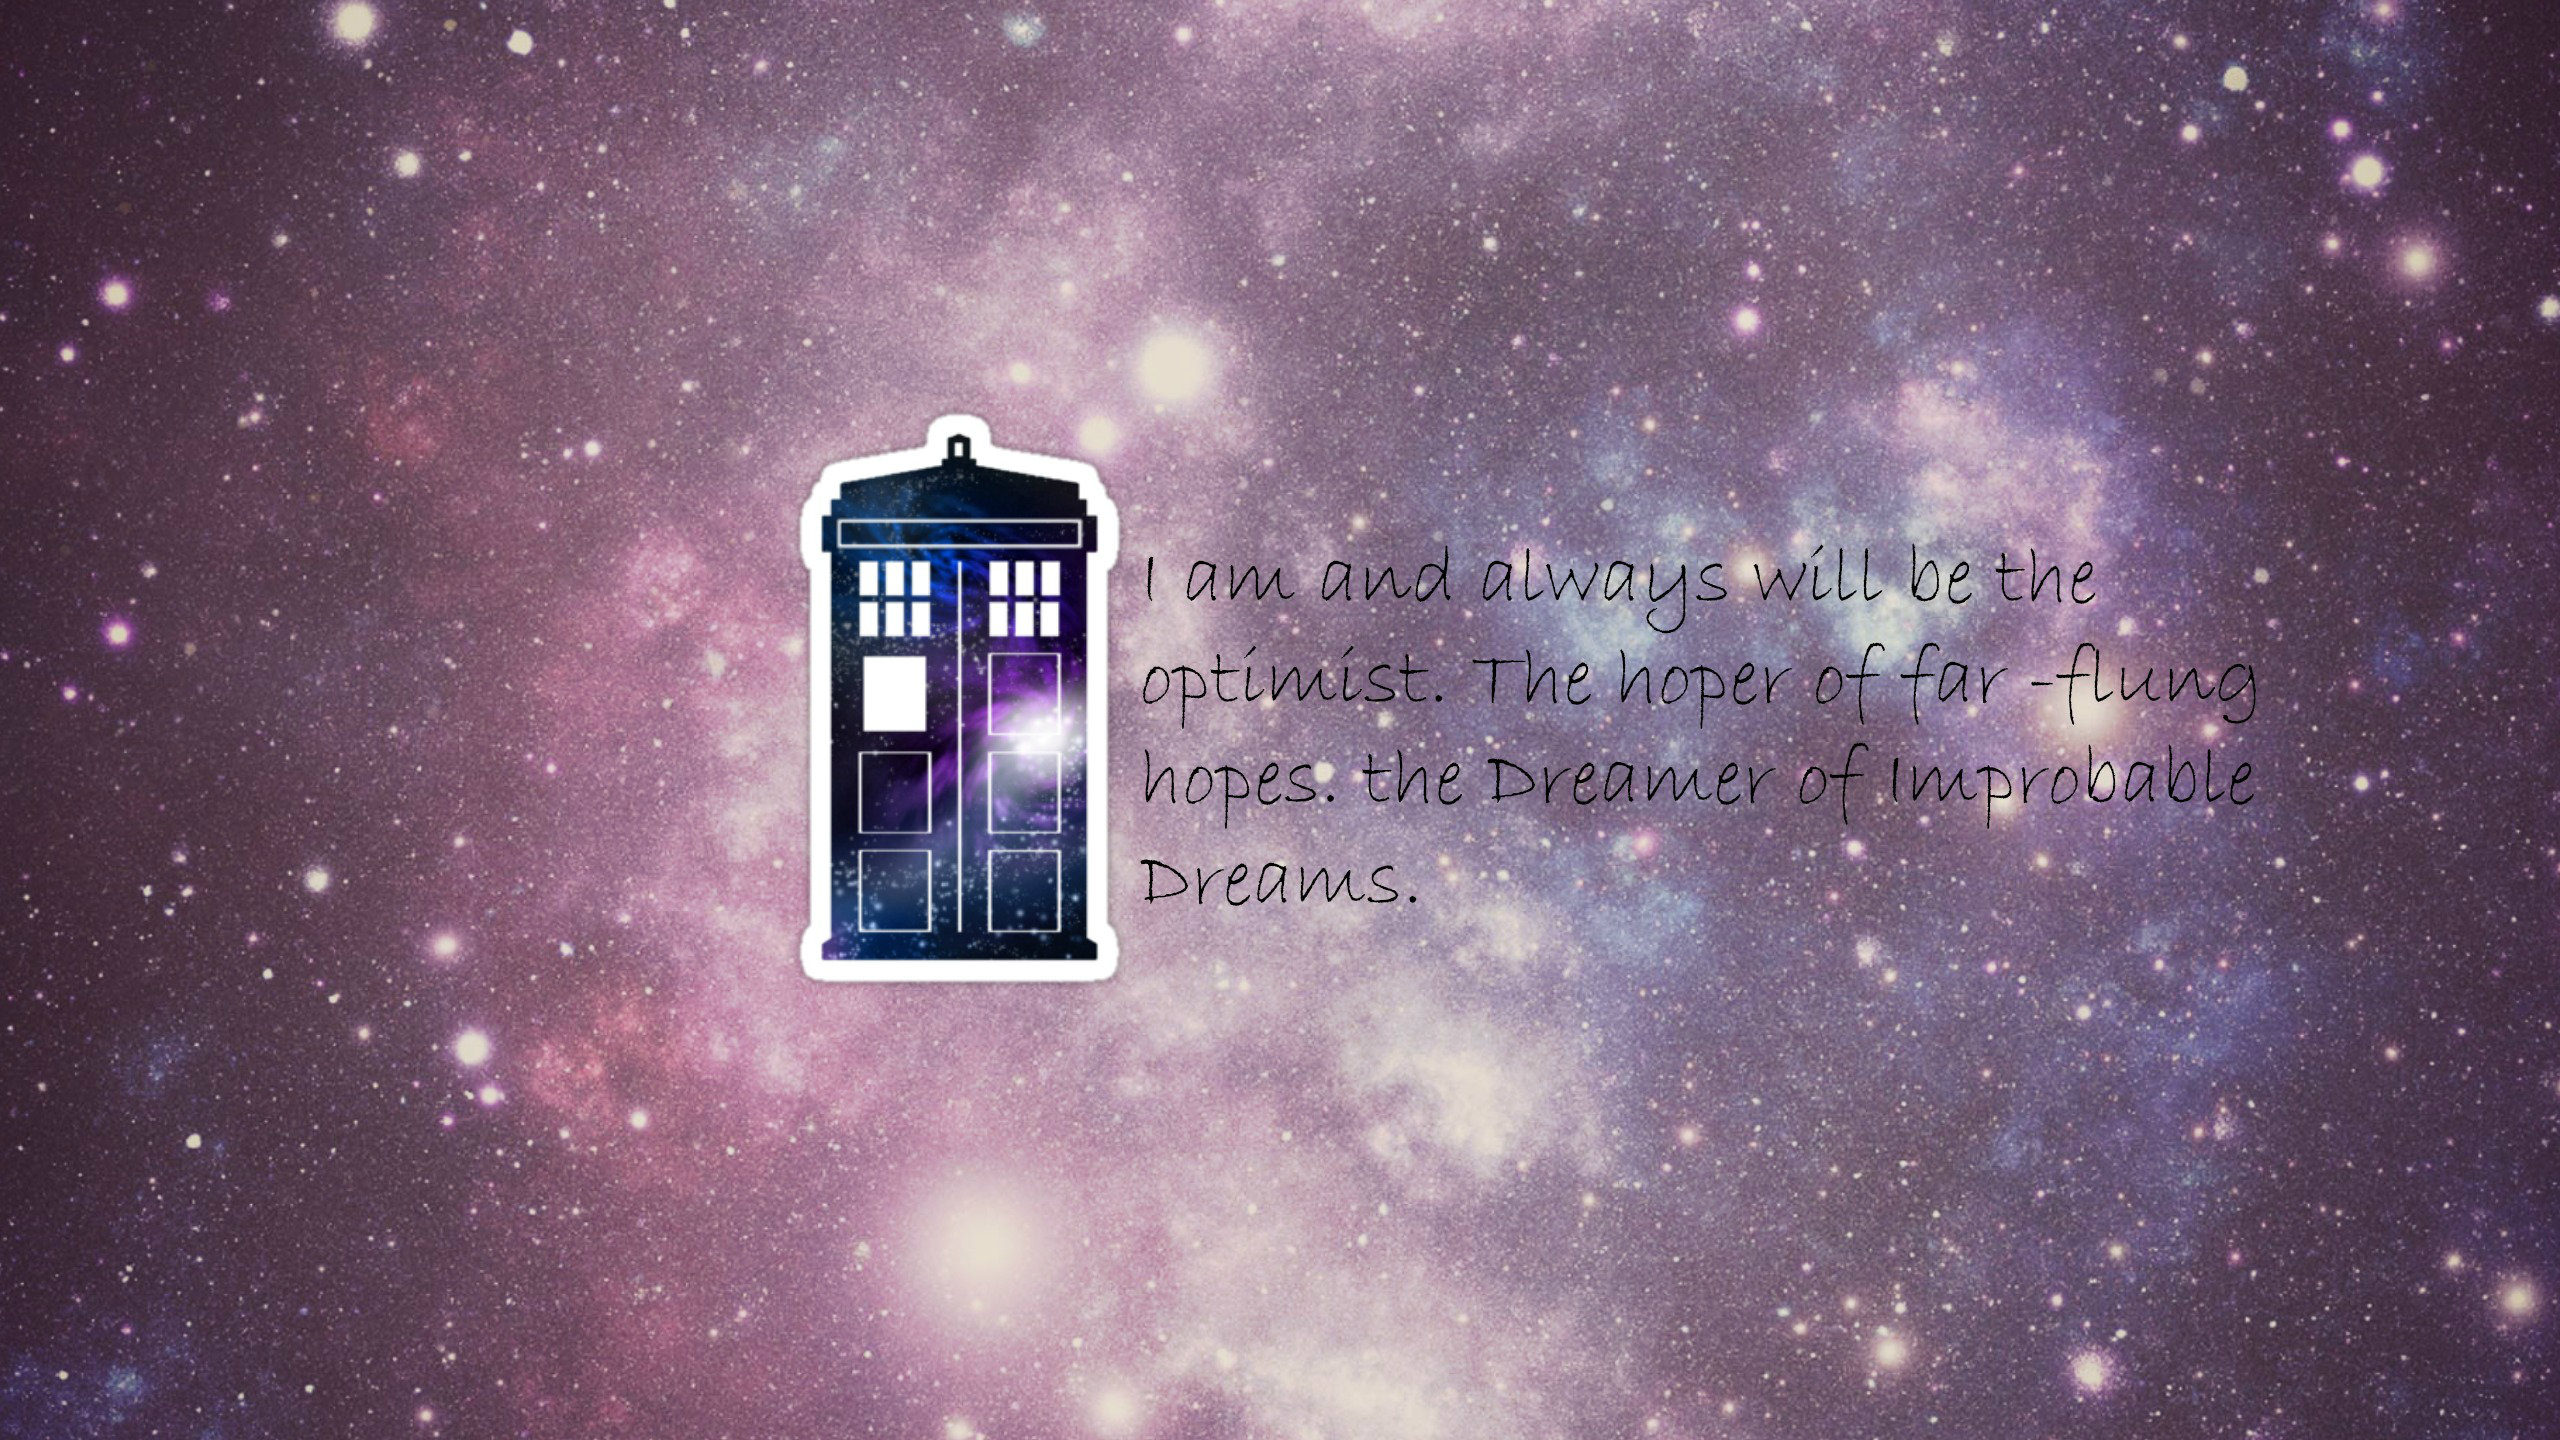 Doctor Who Tardis wallpaper 2560x1440